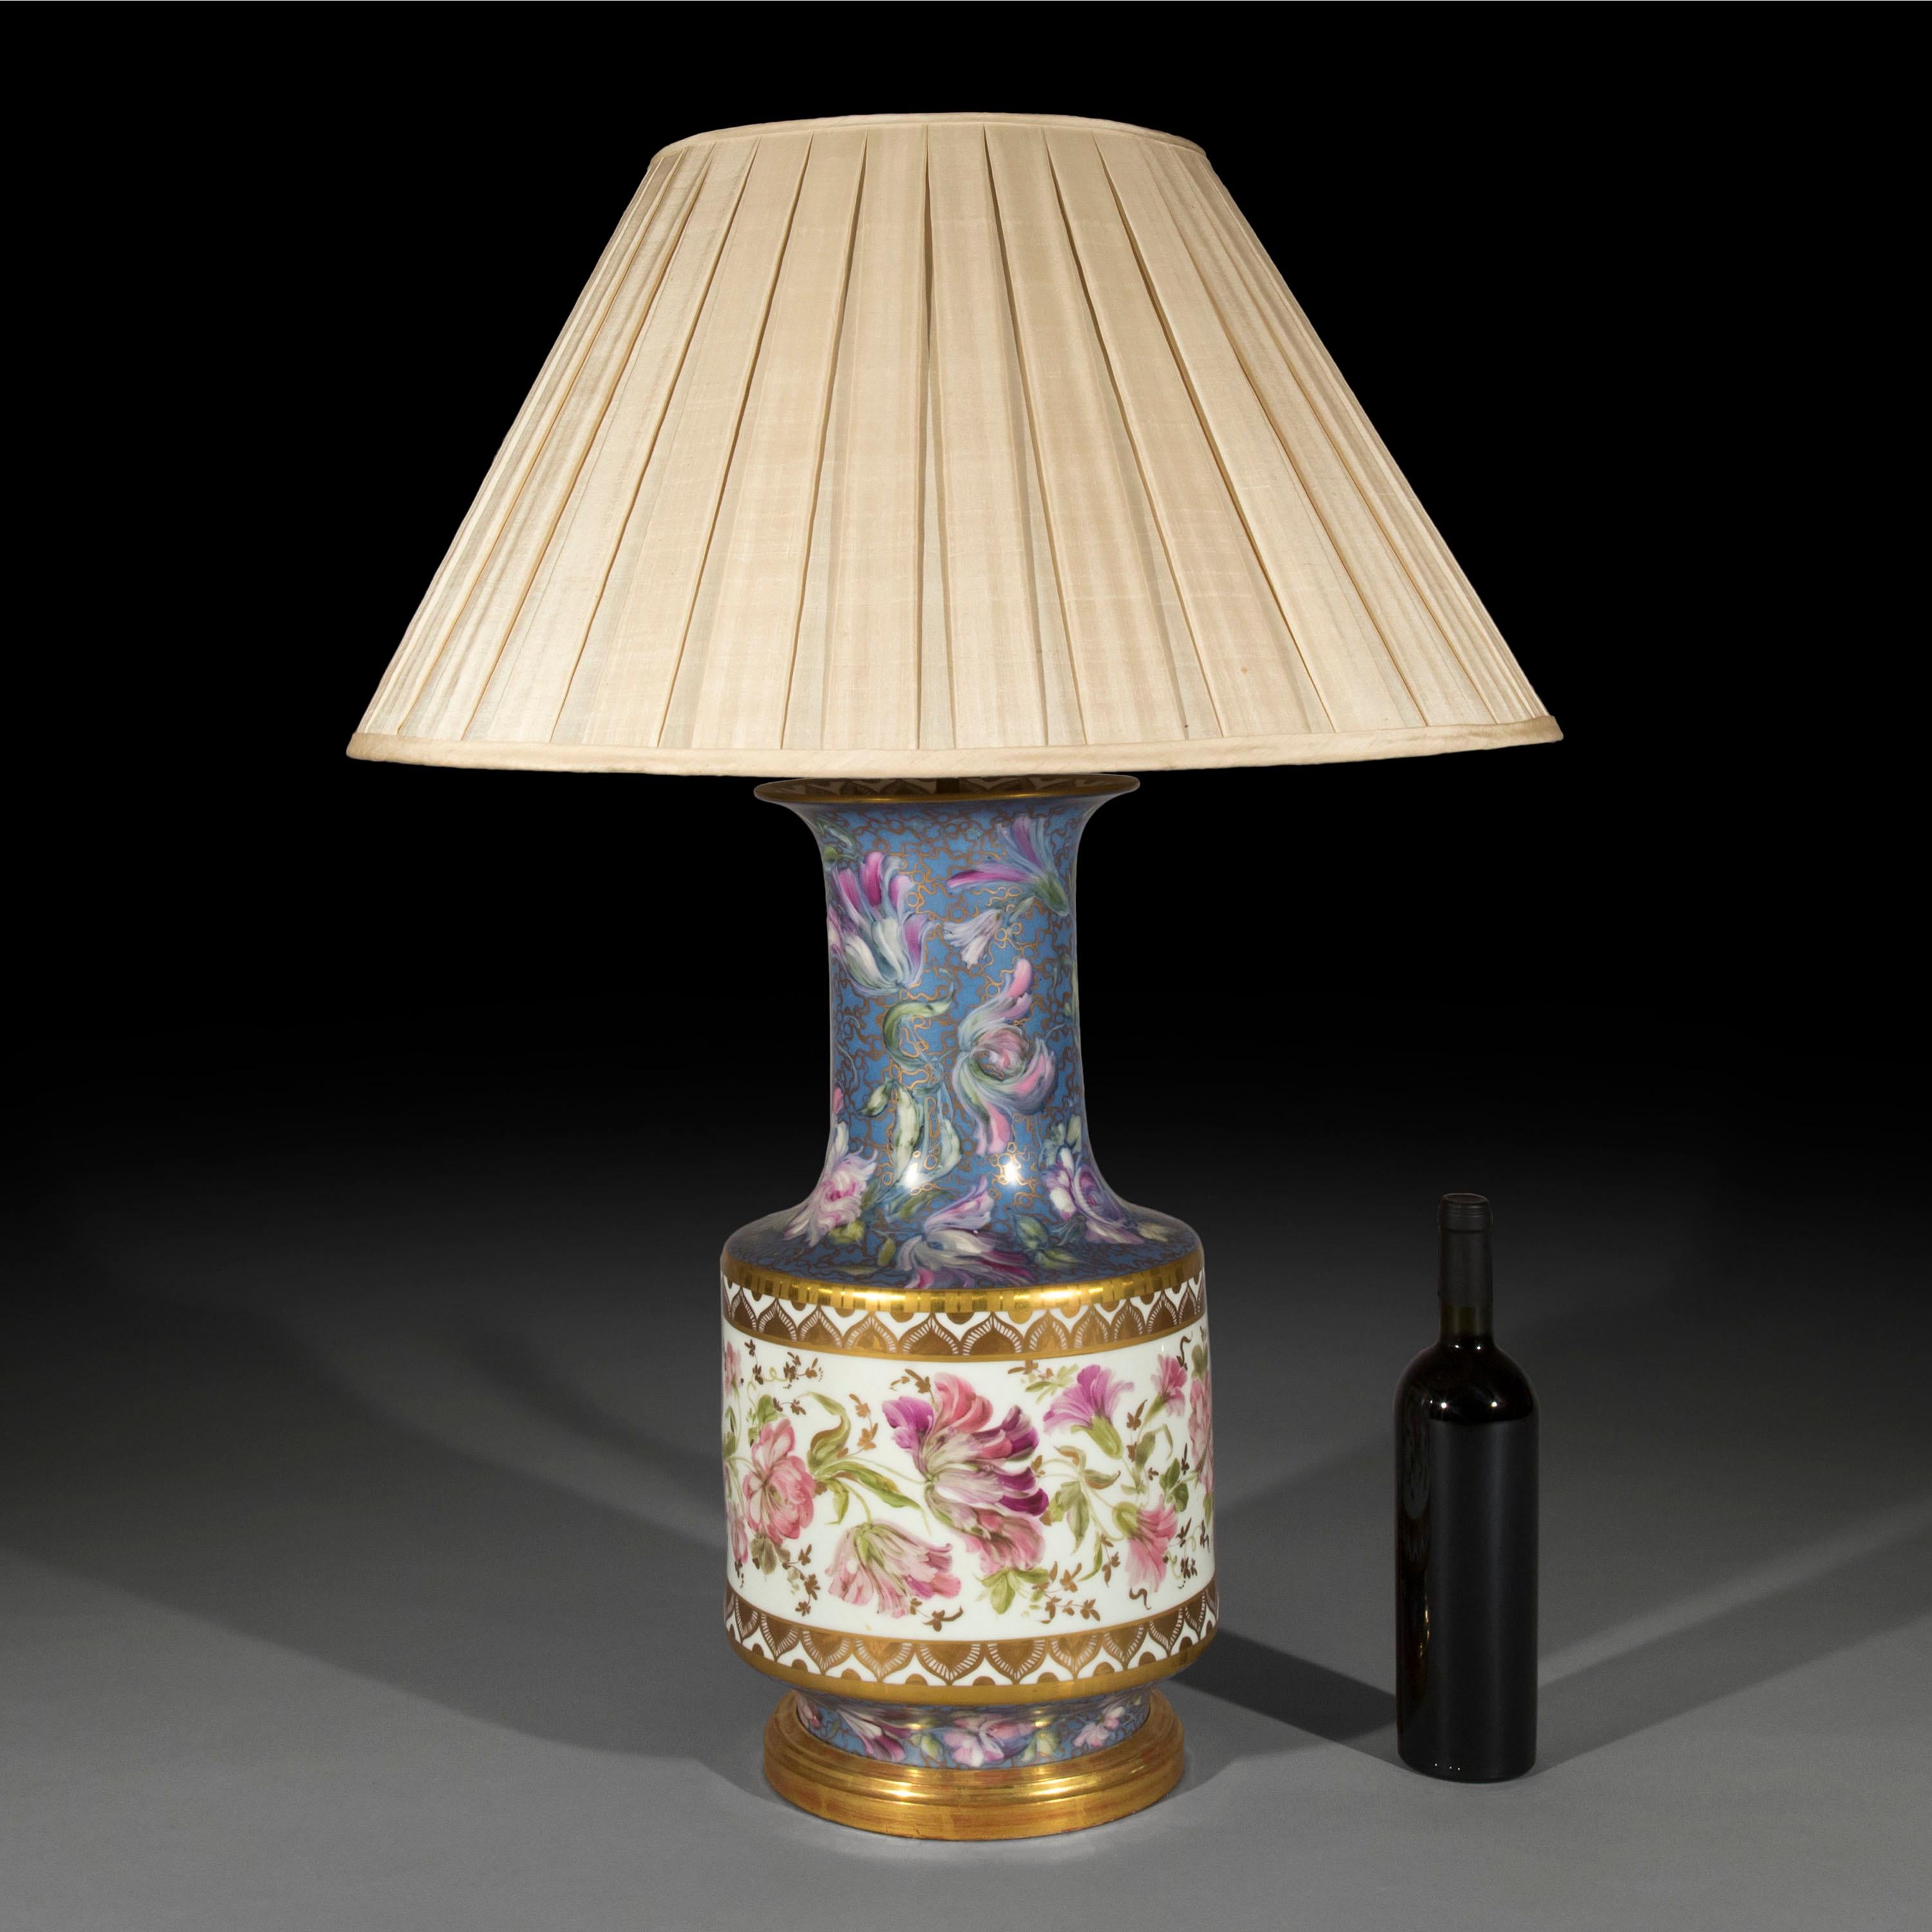 Beaux Arts Massive Antique Vase Table Lamp with Hand Painted Floral Decoration For Sale